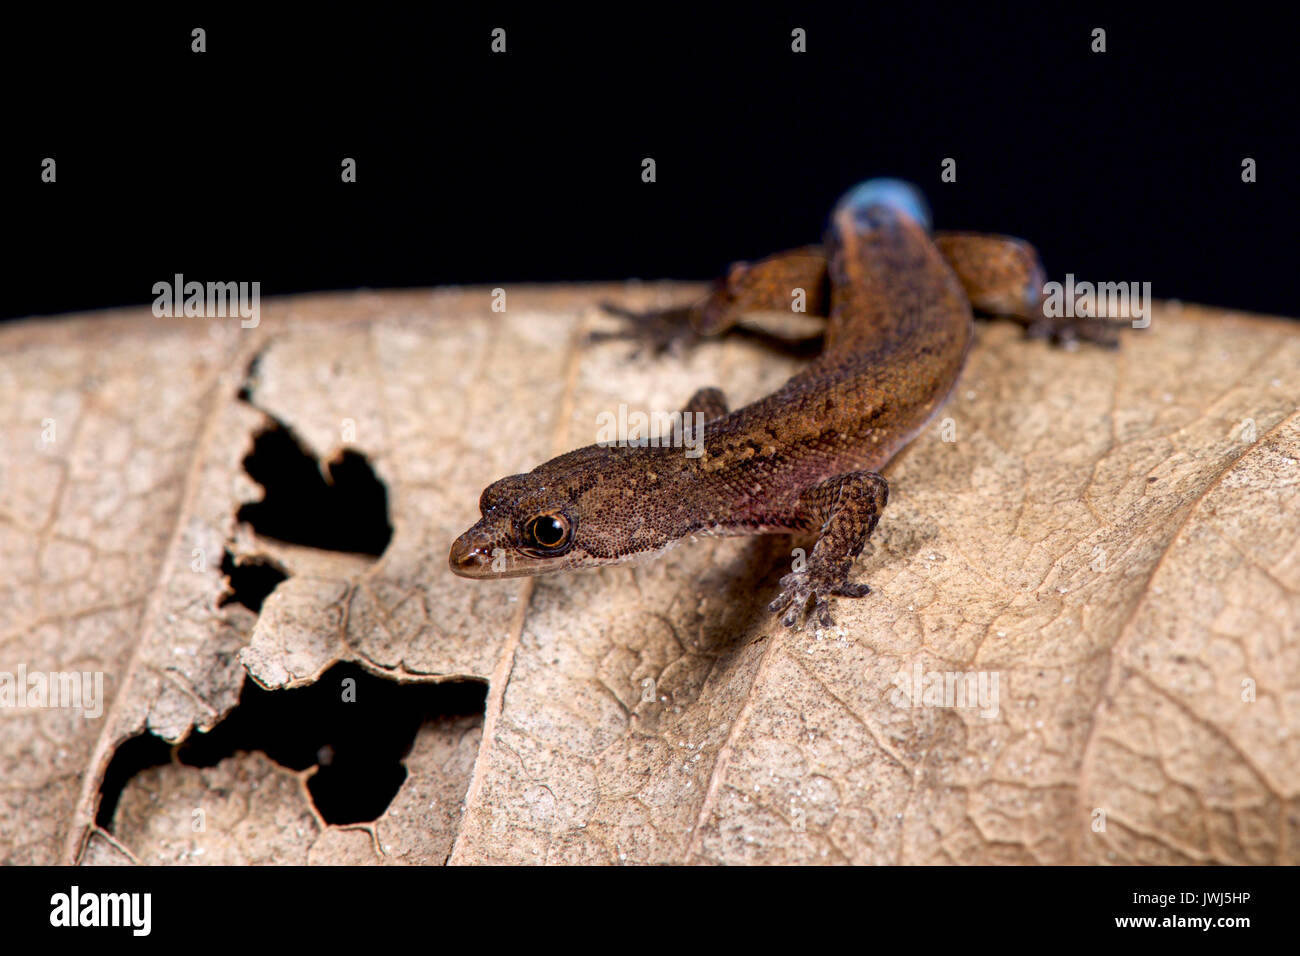 Pigmeo brasileño gecko, Chatogekko amazonicus Foto de stock